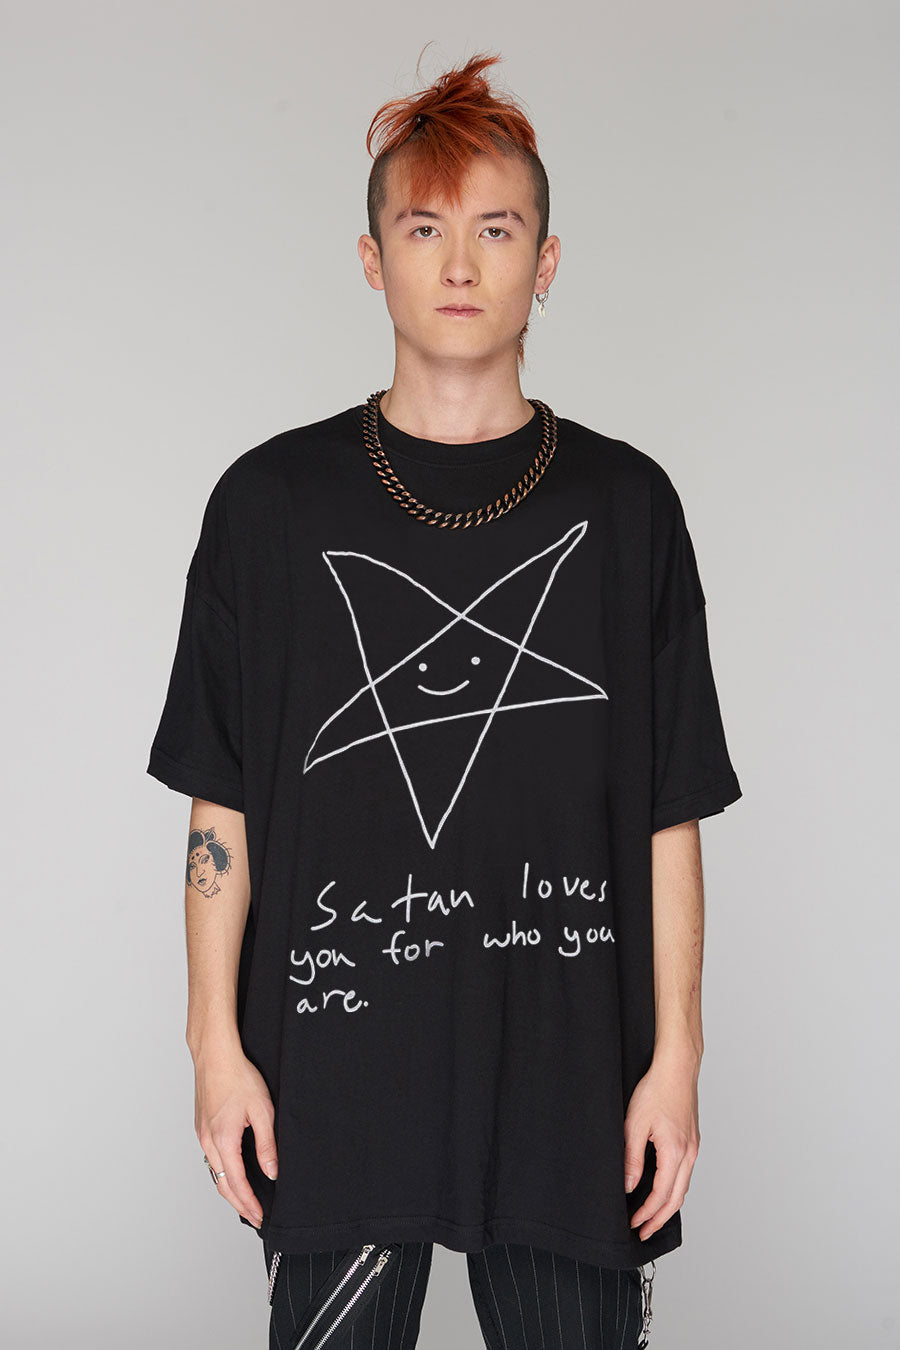 Satan Loves You Oversize TShirt